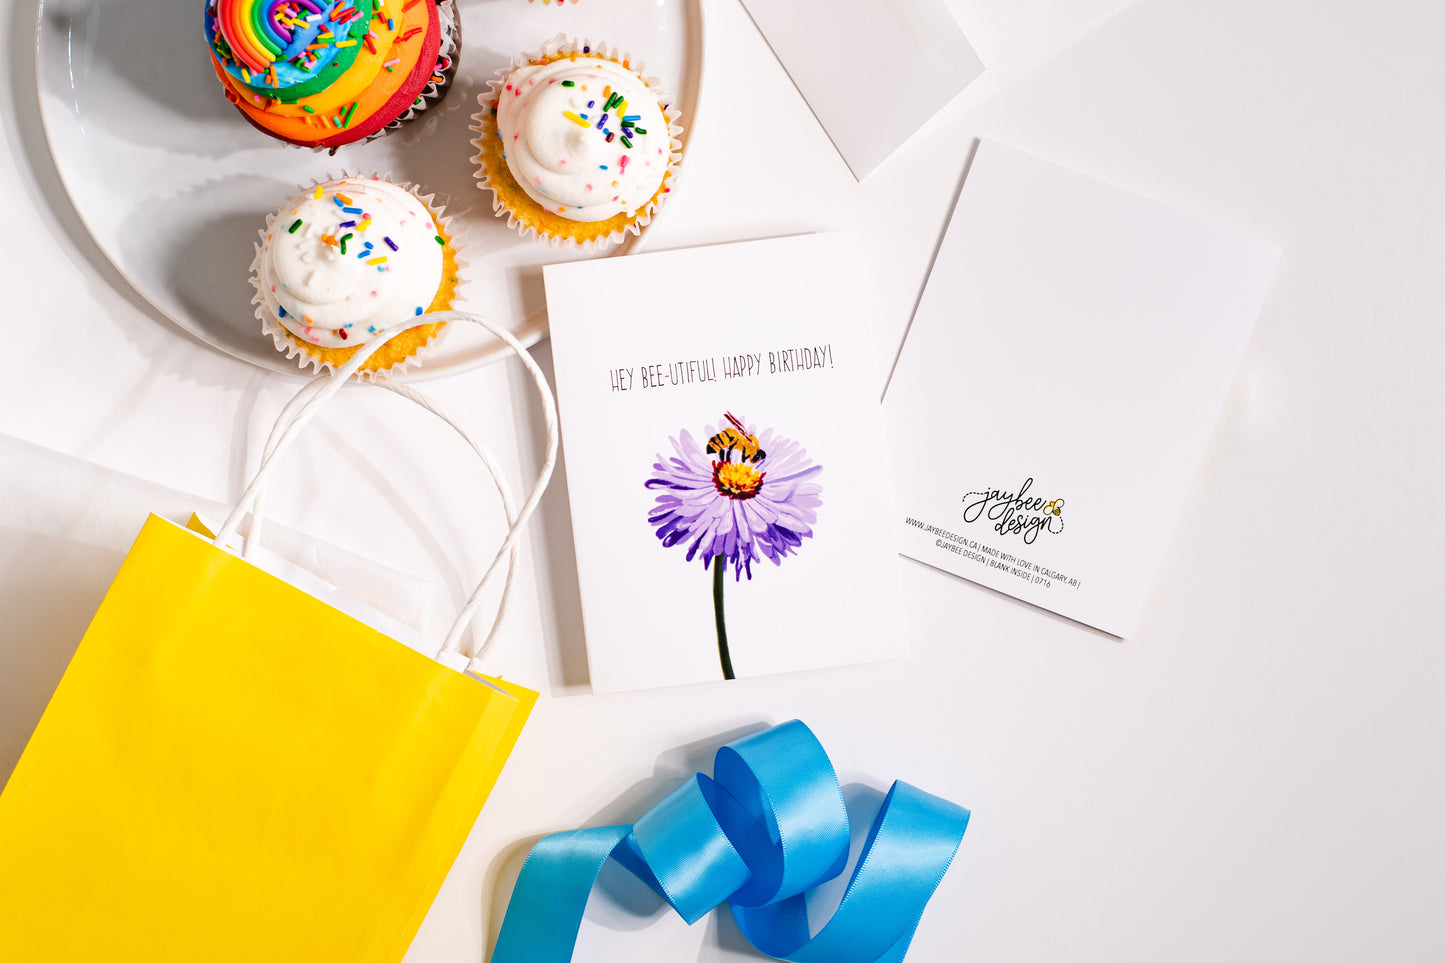 Hey Bee-utiful! Happy Birthday! - Greeting Card